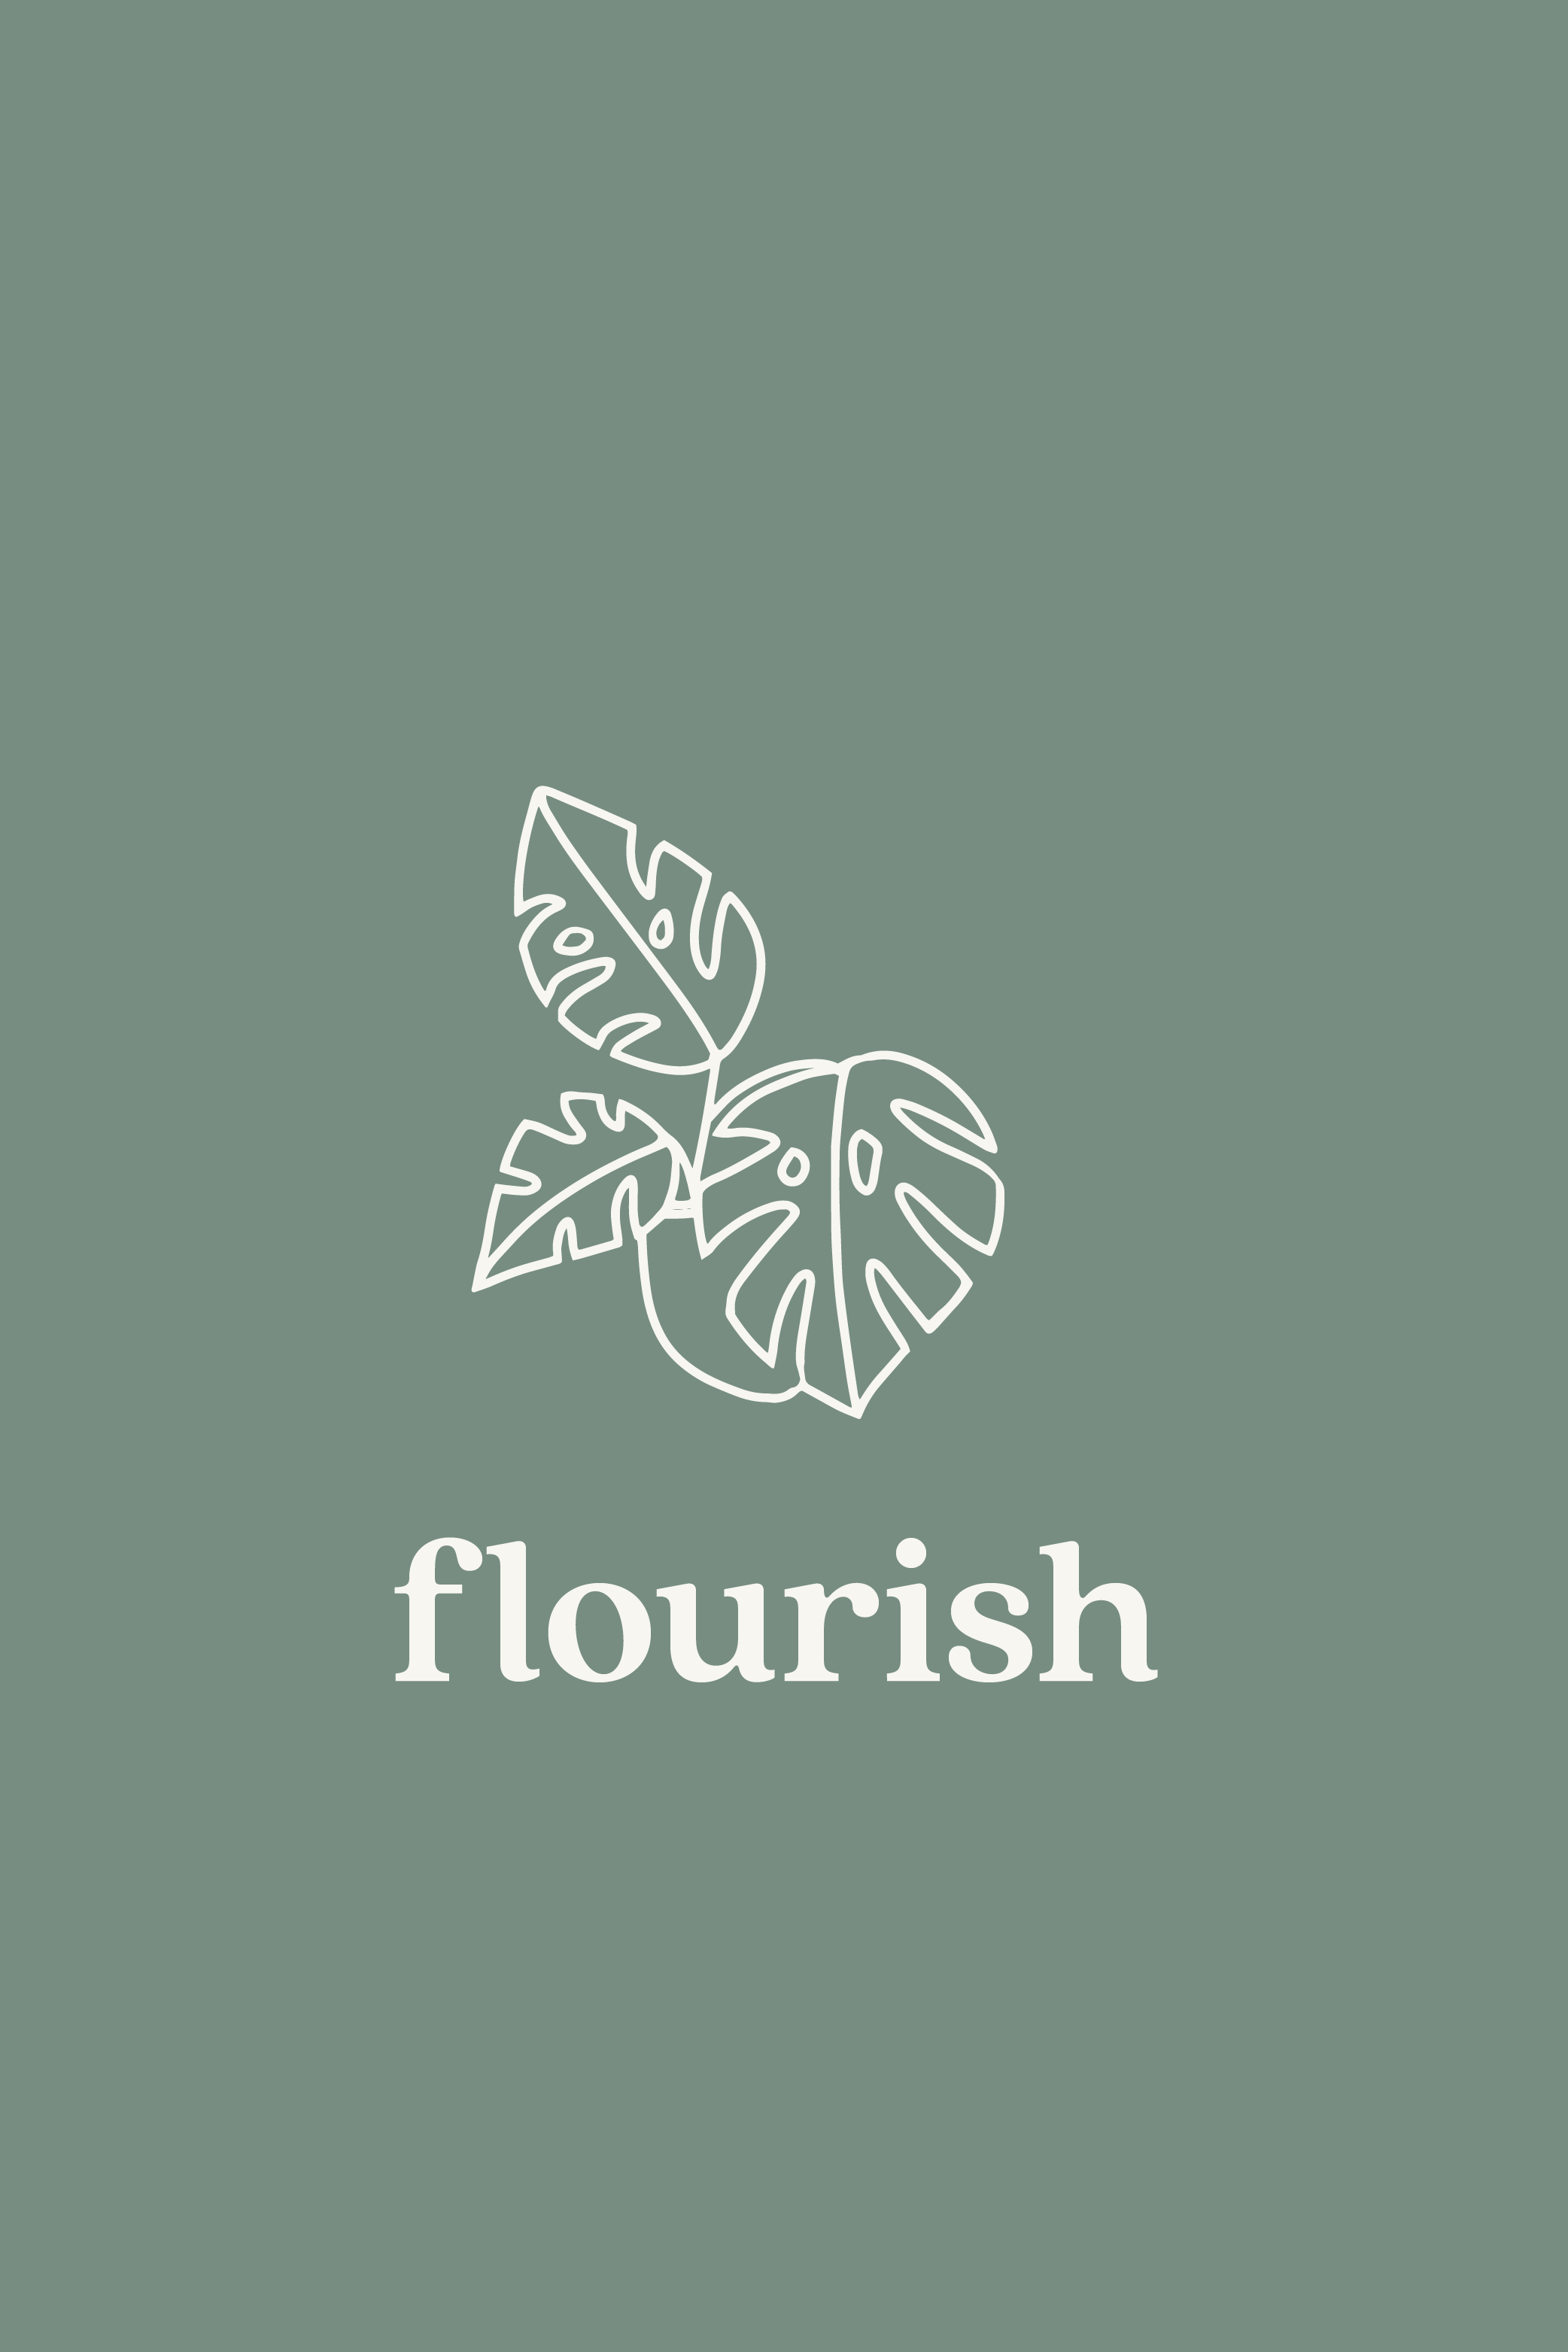 Flourish -   14 monstera plants Quotes ideas